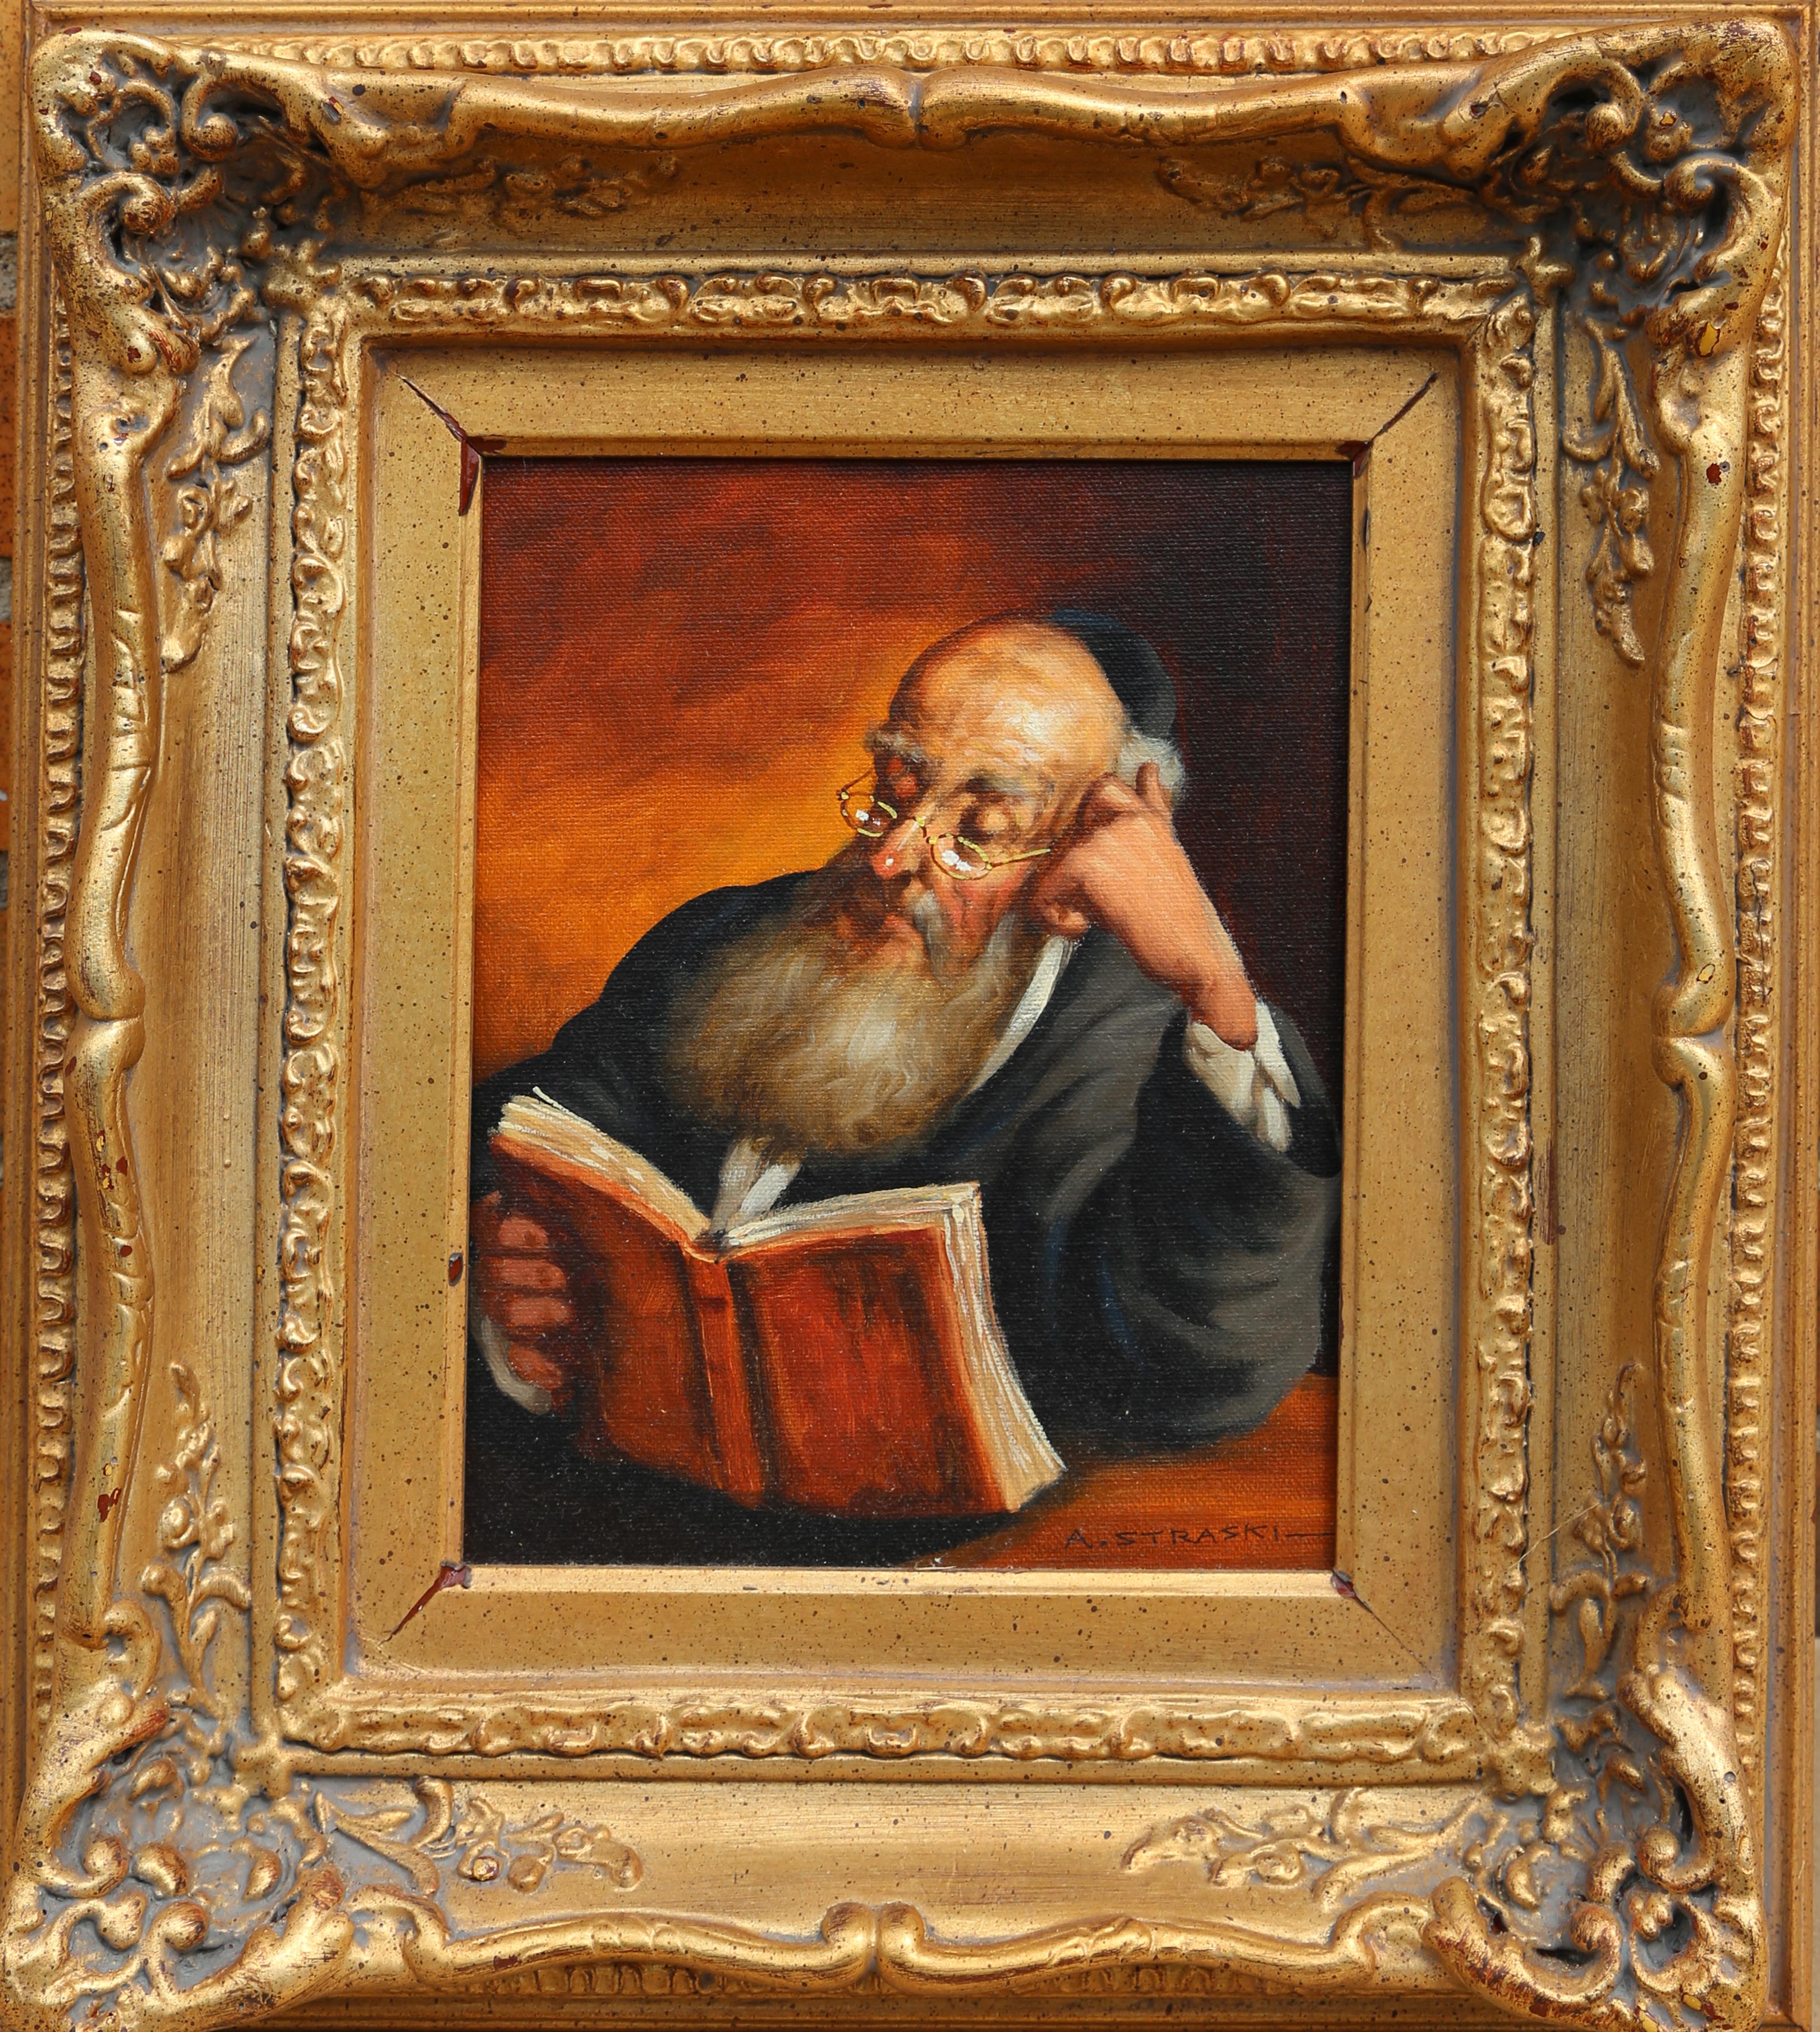 Rabbi Reading, Oil Painting by Abraham Straski